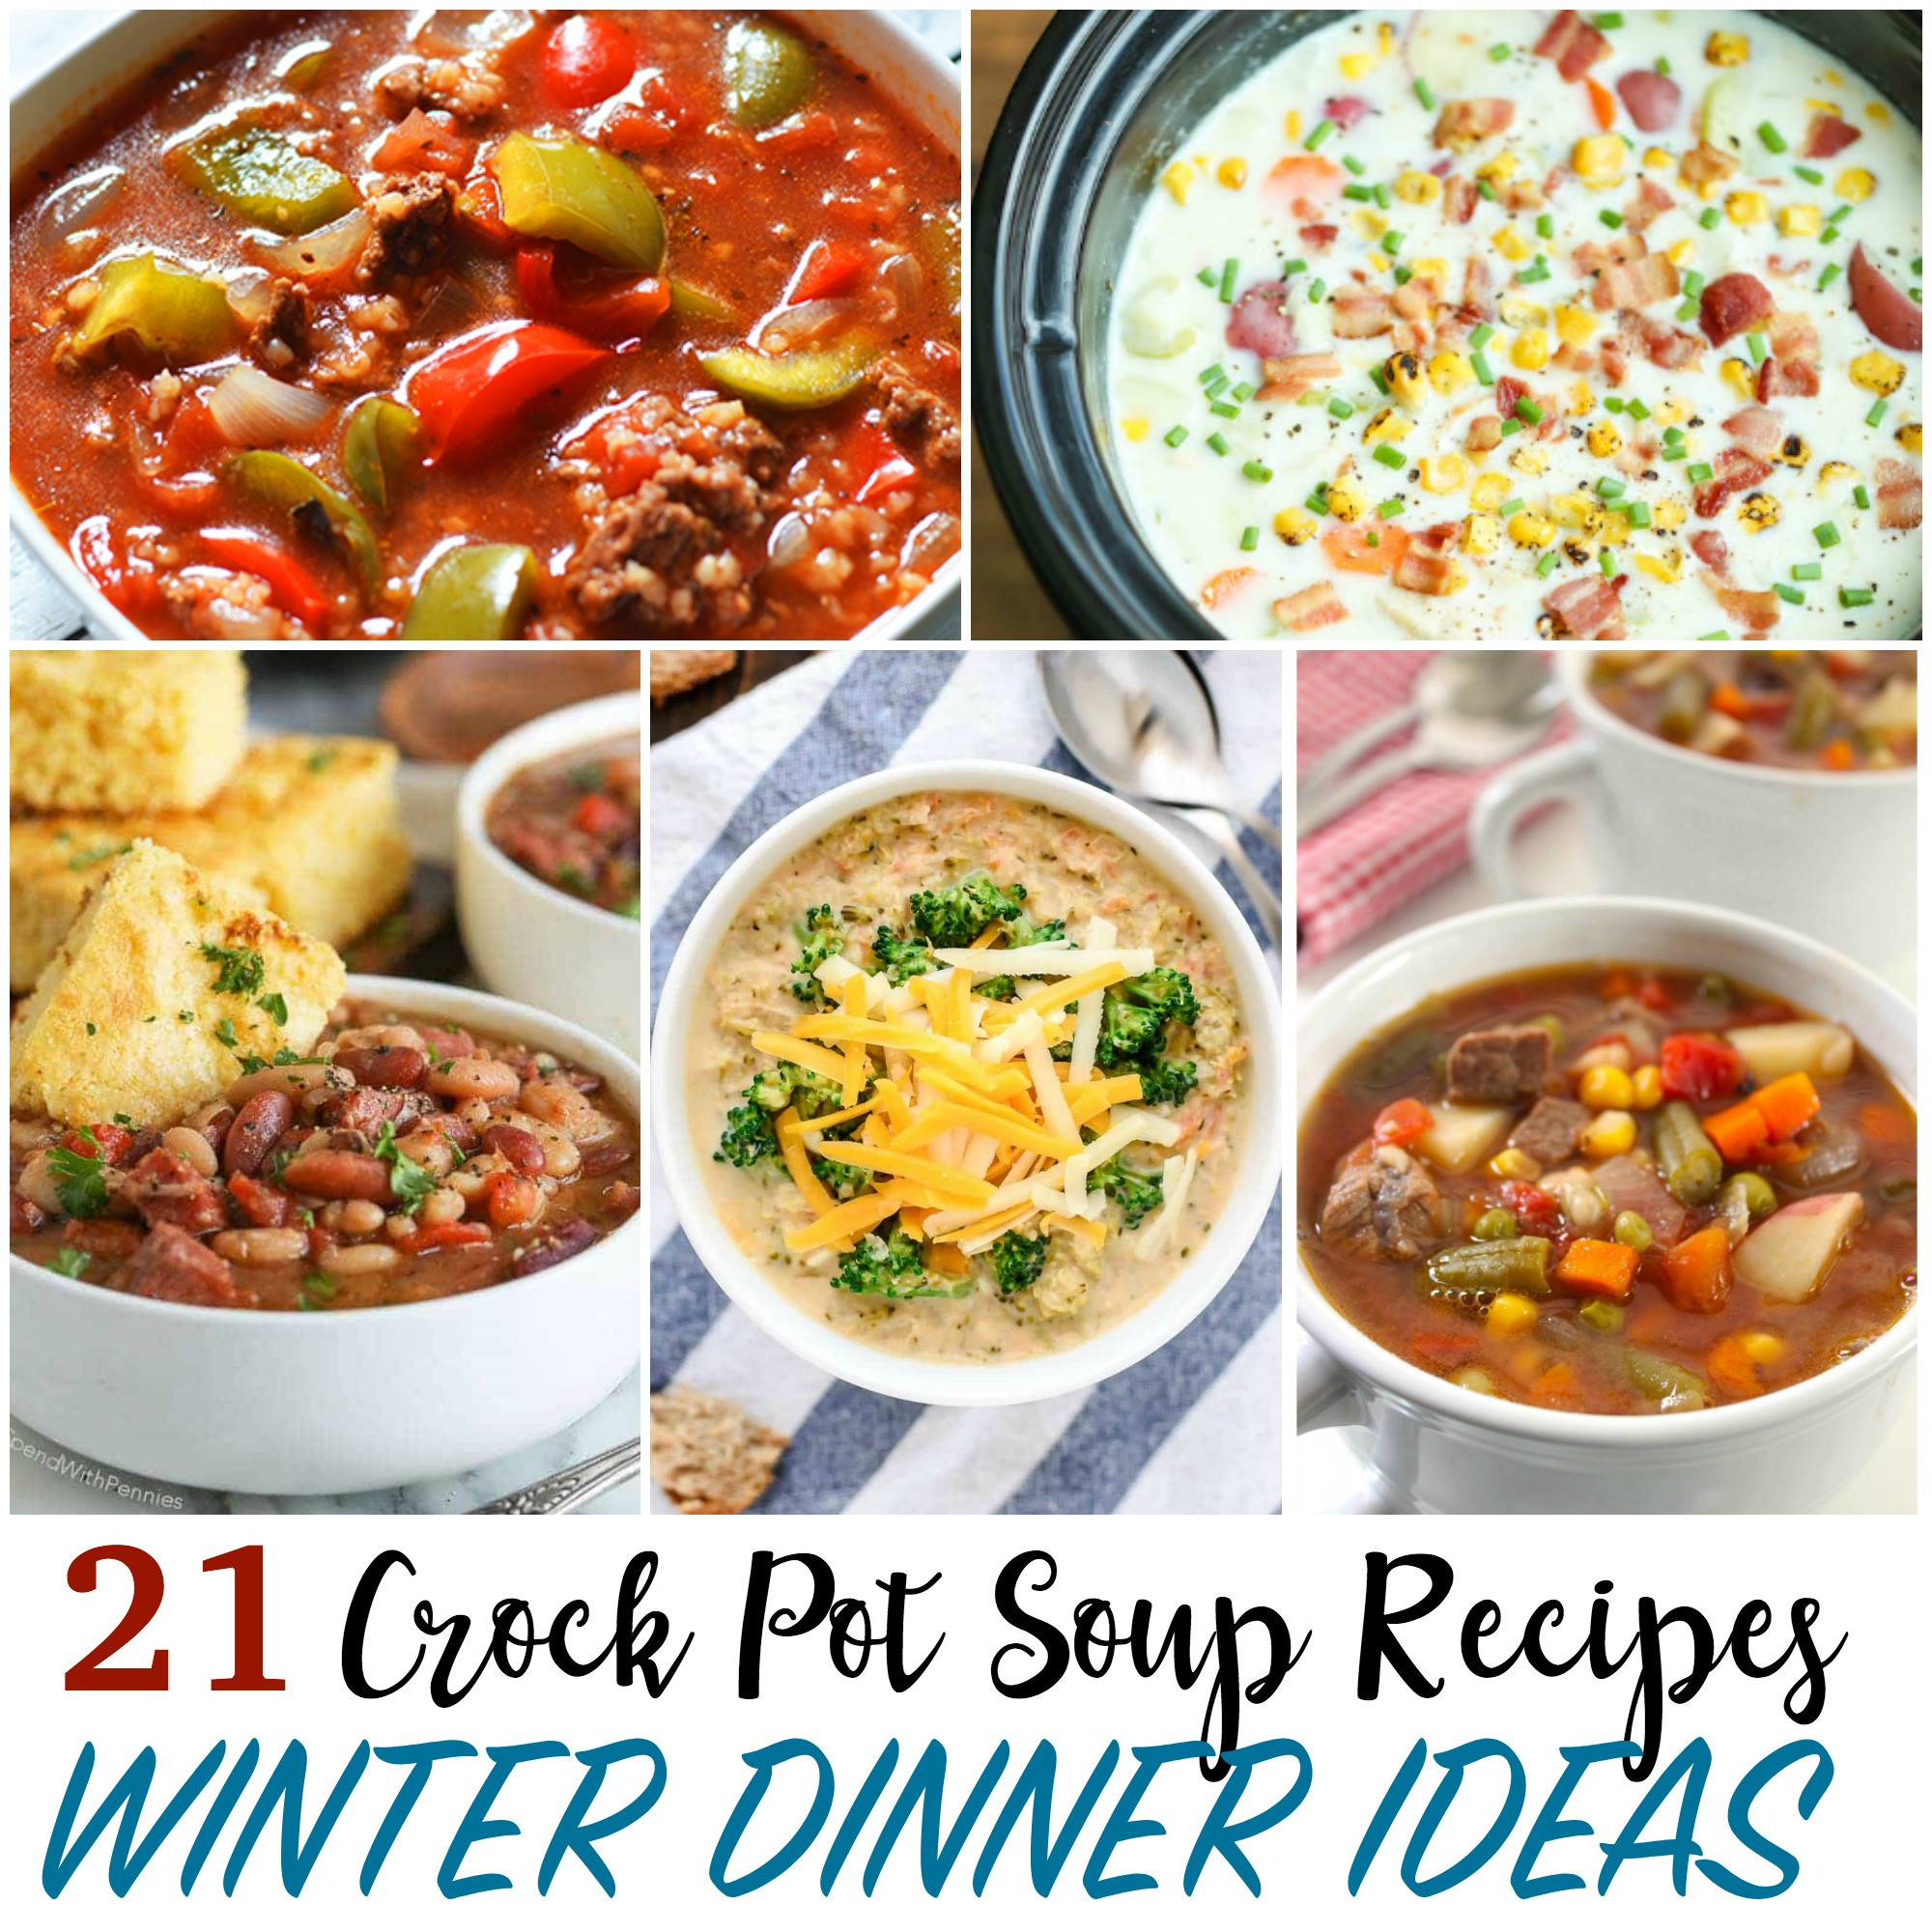 Winter Dinners Ideas
 Winter Dinner Ideas 22 Crock Pot Soup Recipes